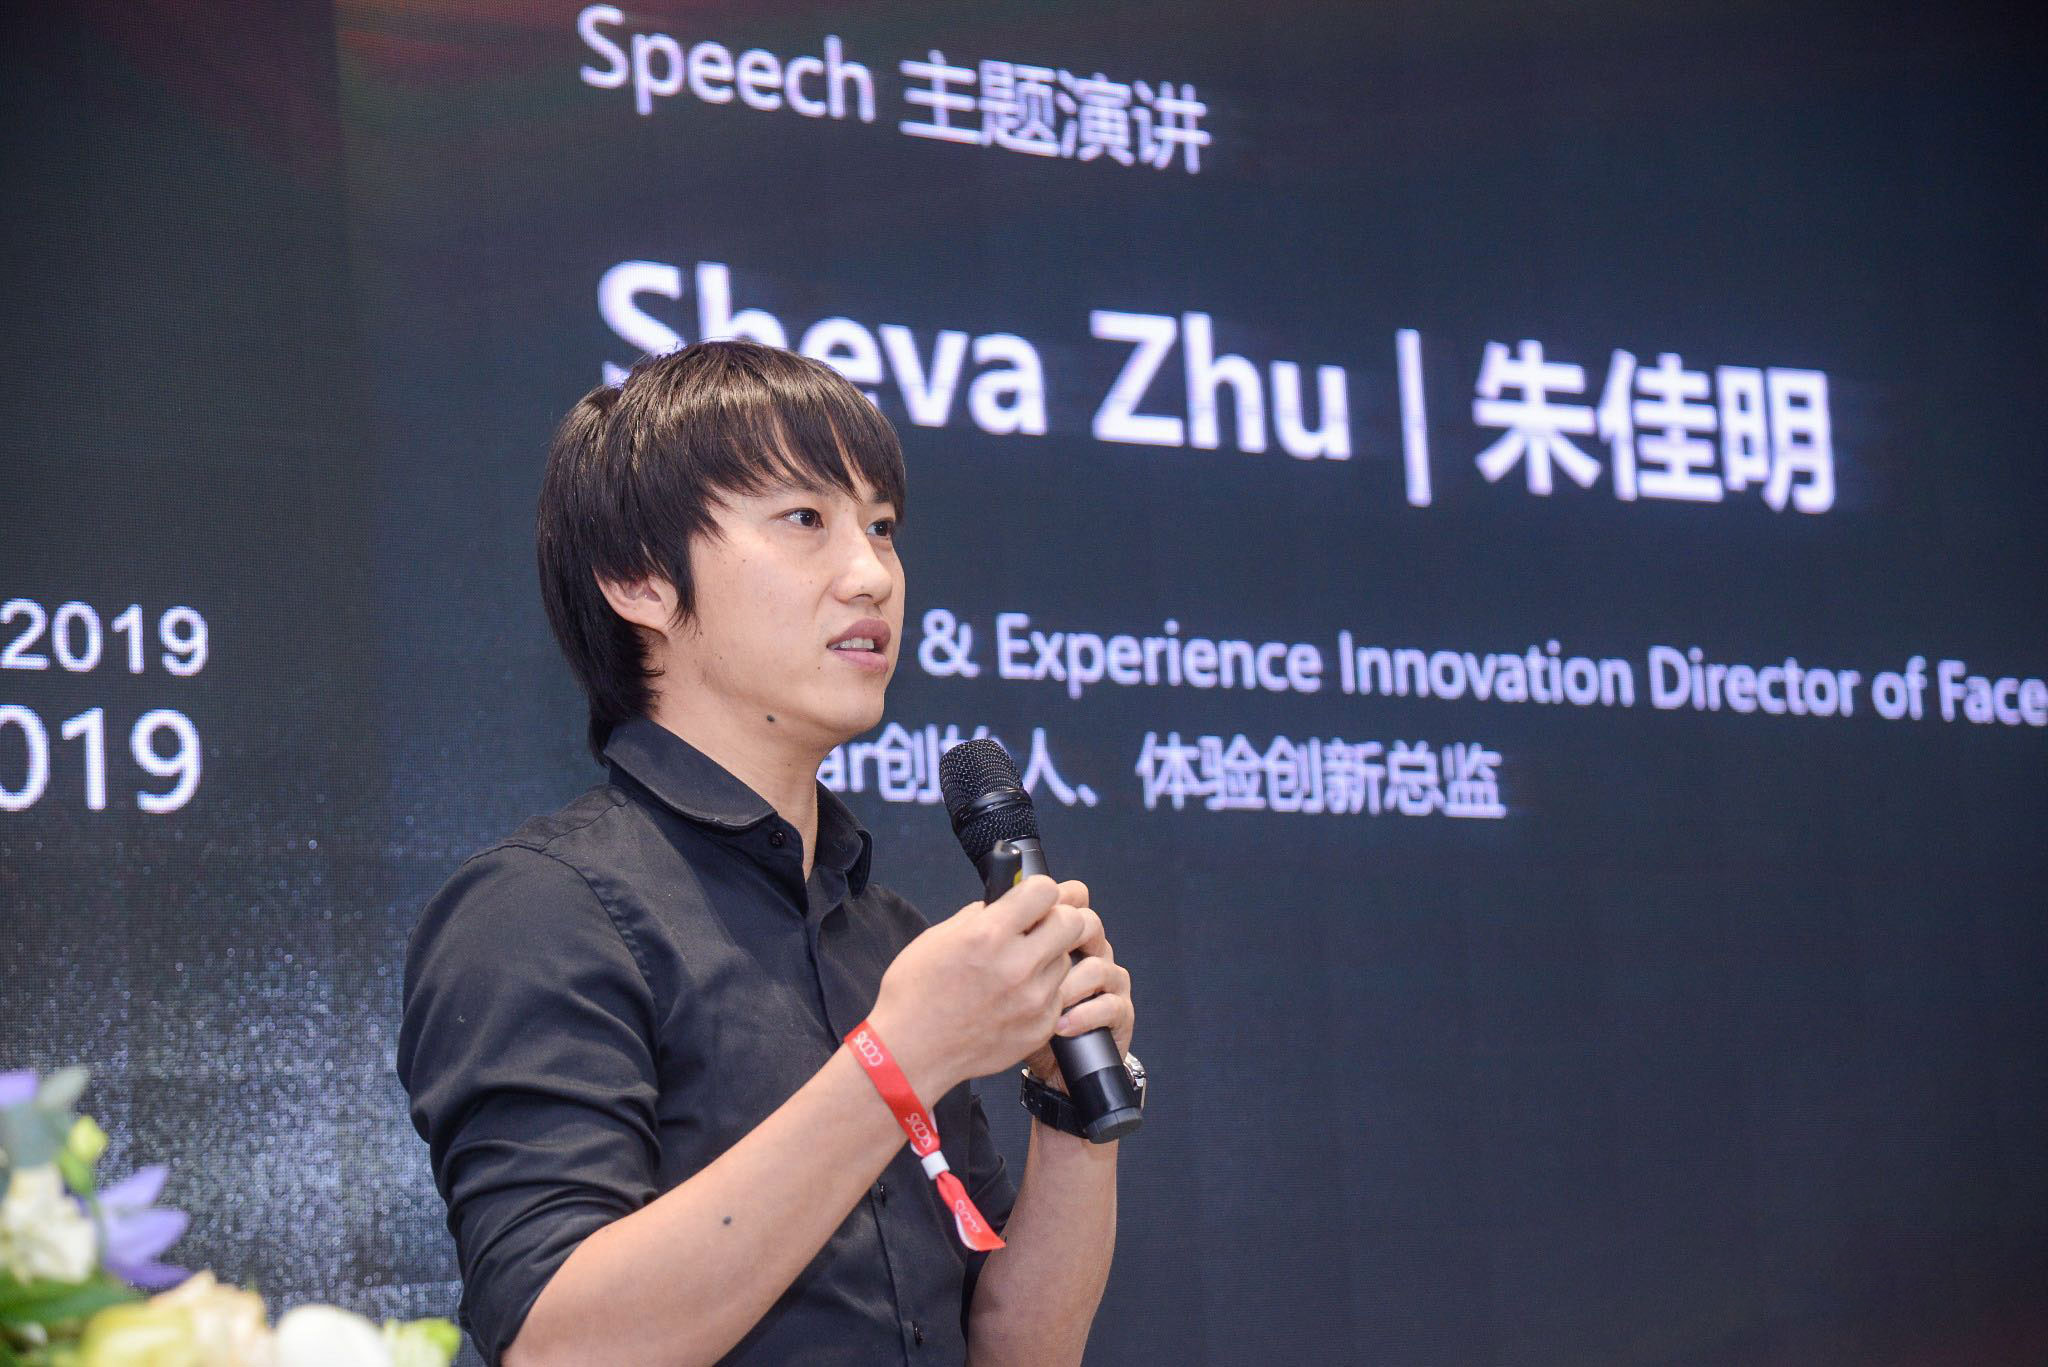 Sheva Zhu, Founder & Experience Innovation Director of facecar